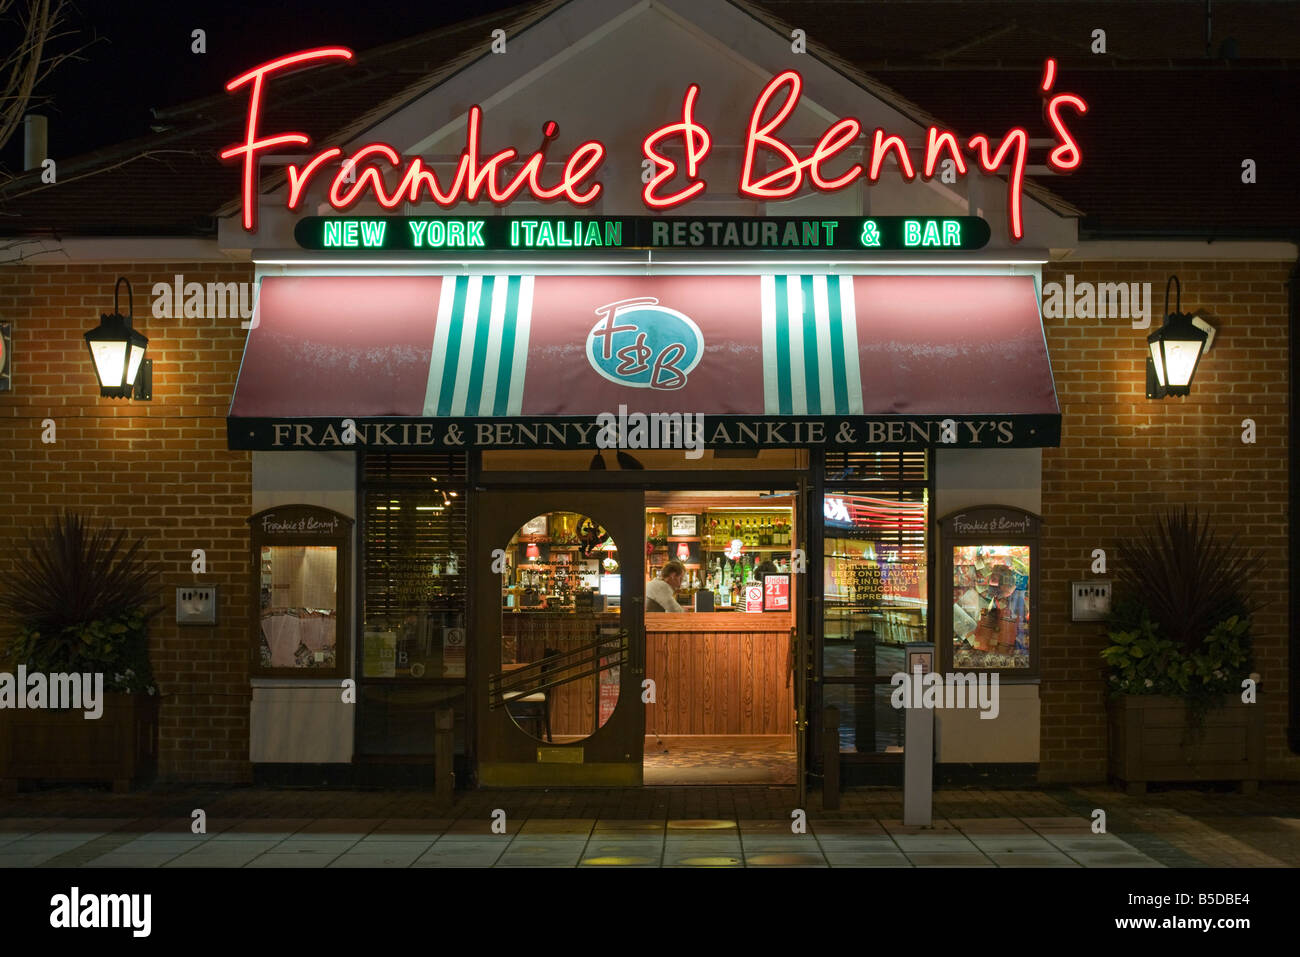 Frankie and Benny's New York Italian Restaurant & Bar - Aylesbury - Buckinghamshire Stock Photo